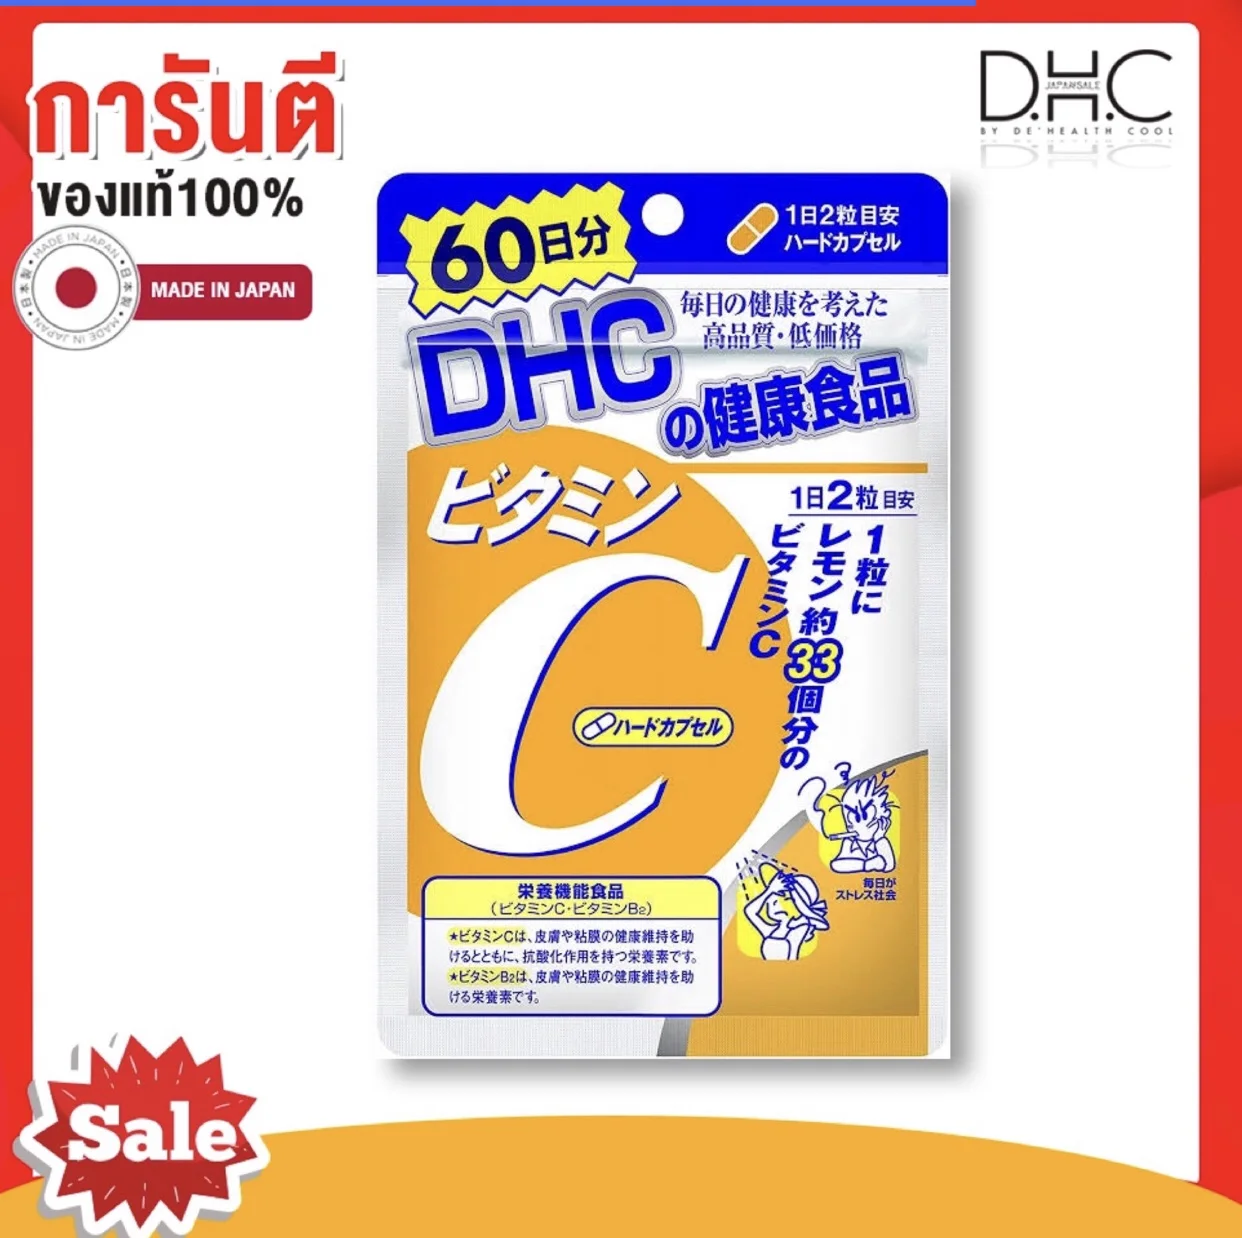 Dhc vitamin c 60 day